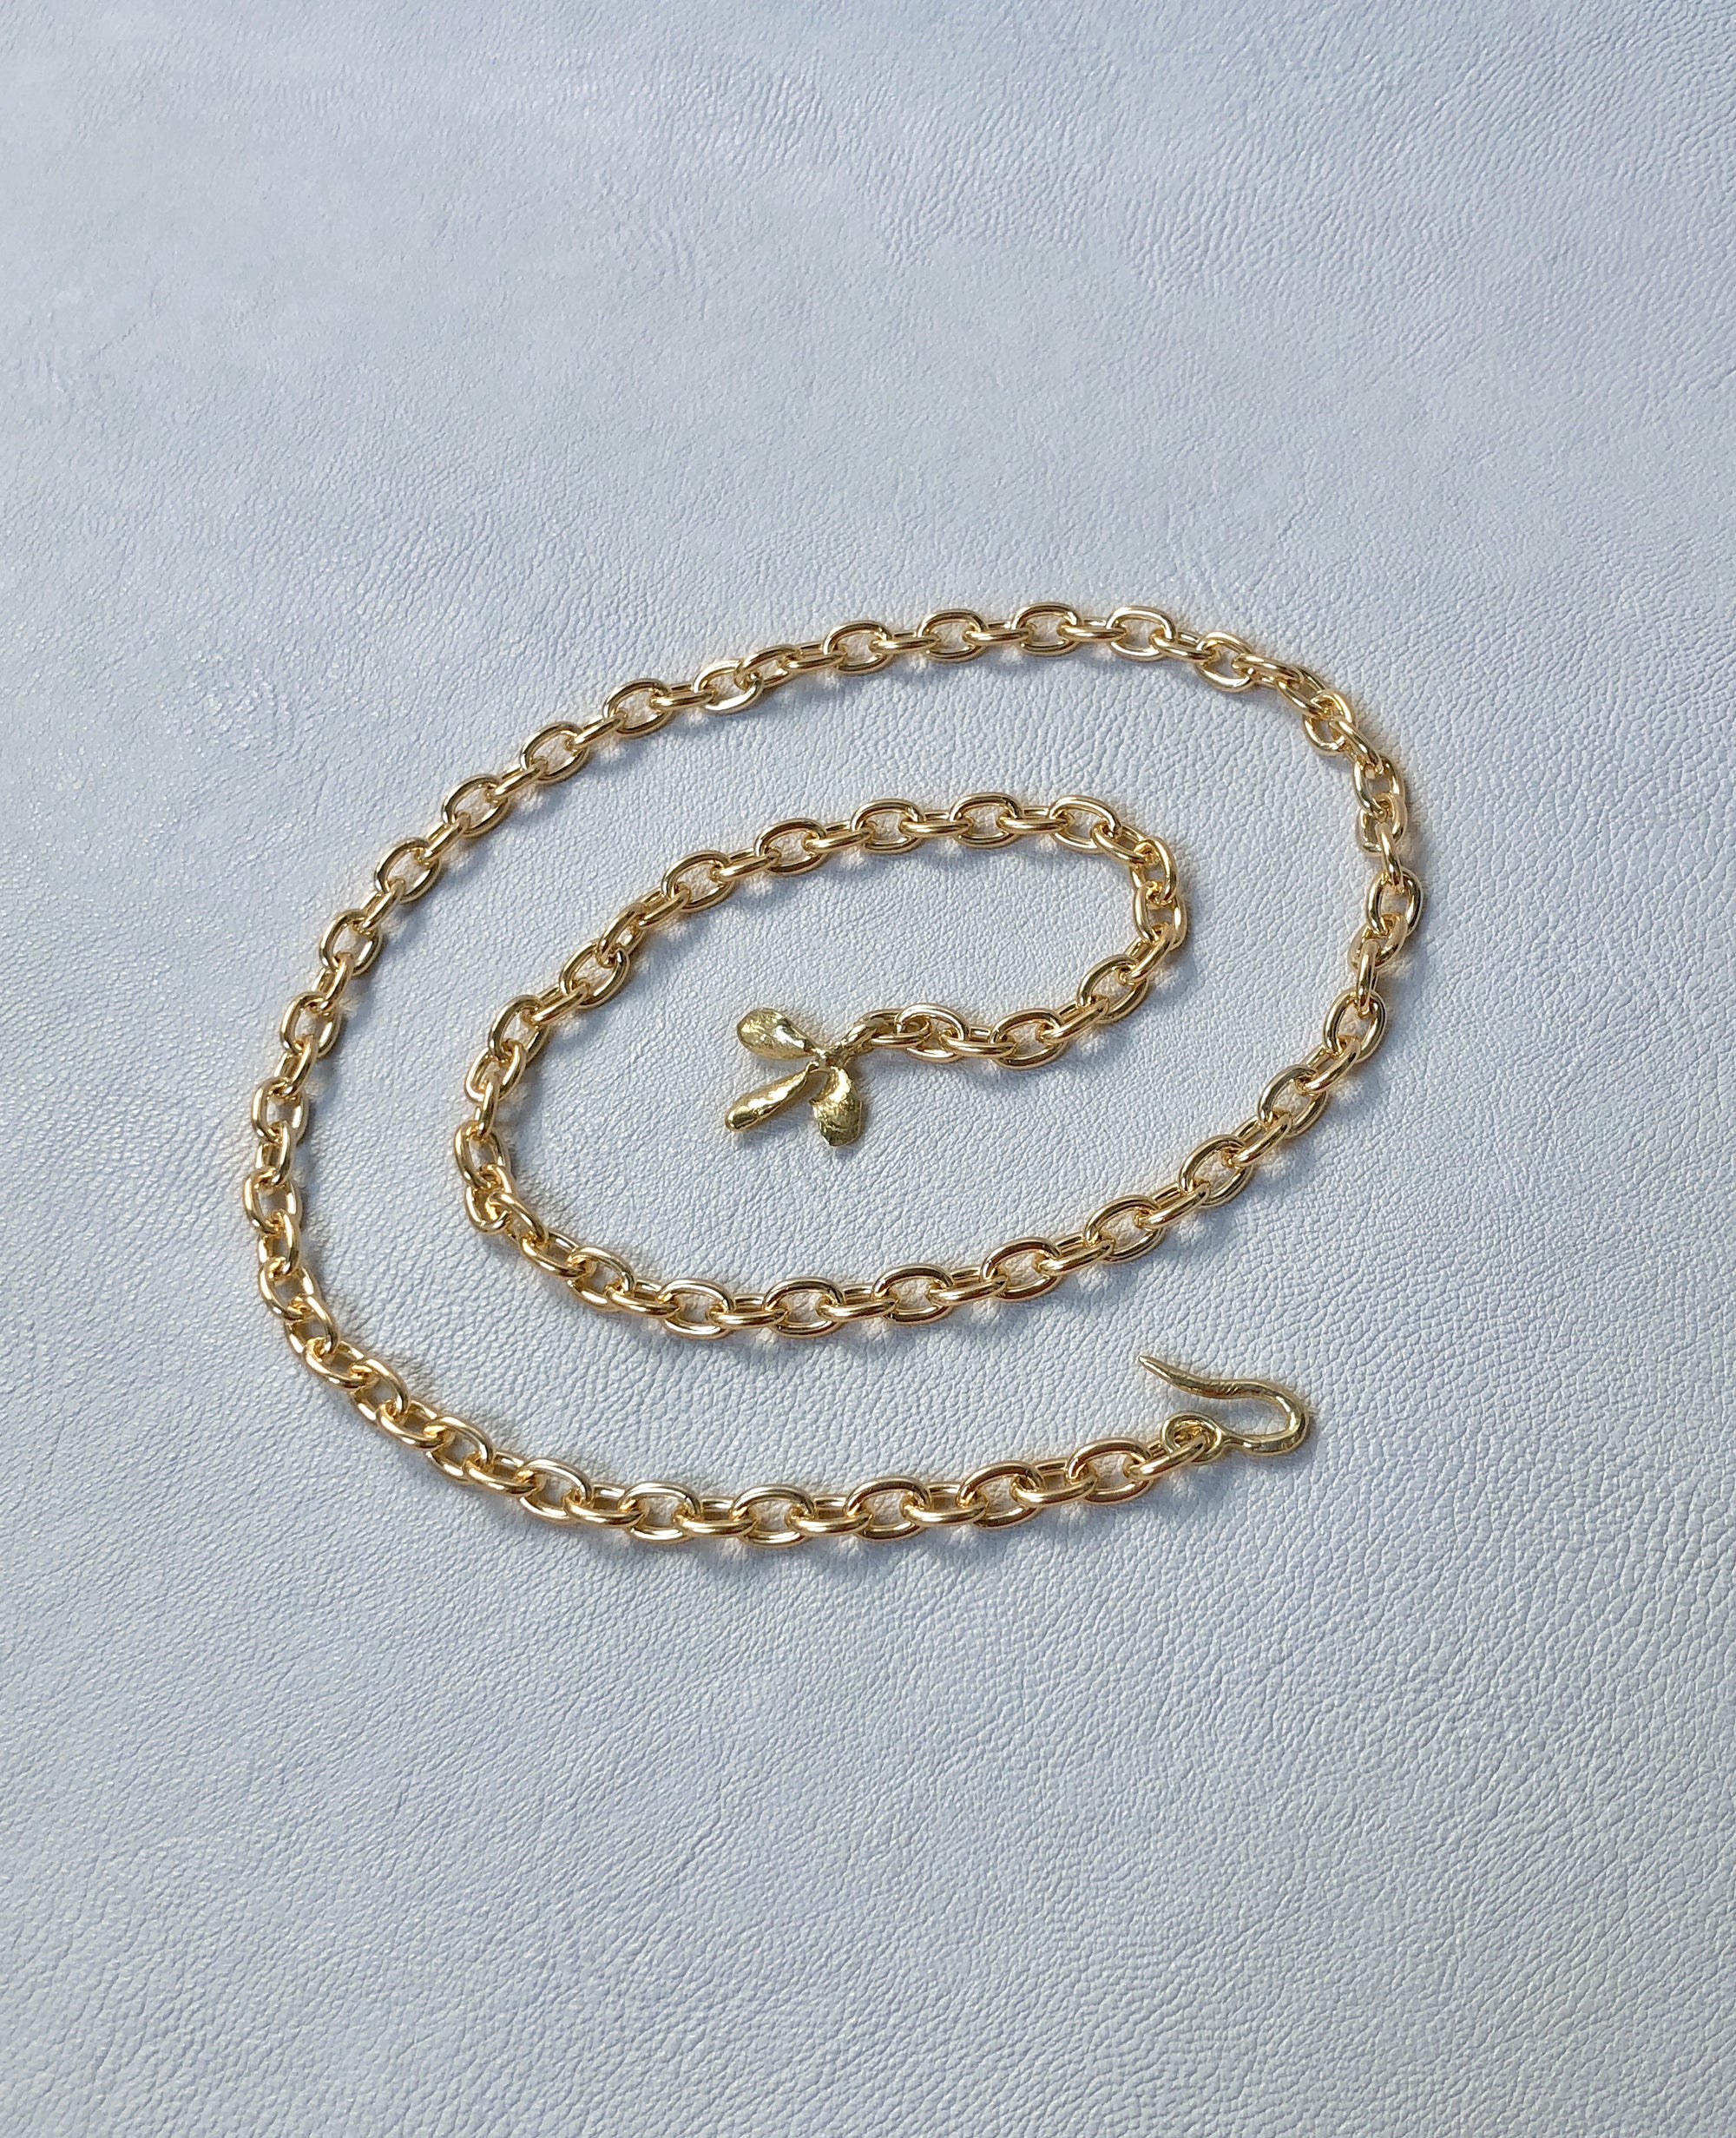 TRIFOLI // brass chain - ORA-C jewelry - handmade jewelry by Montreal based independent designer Caroline Pham